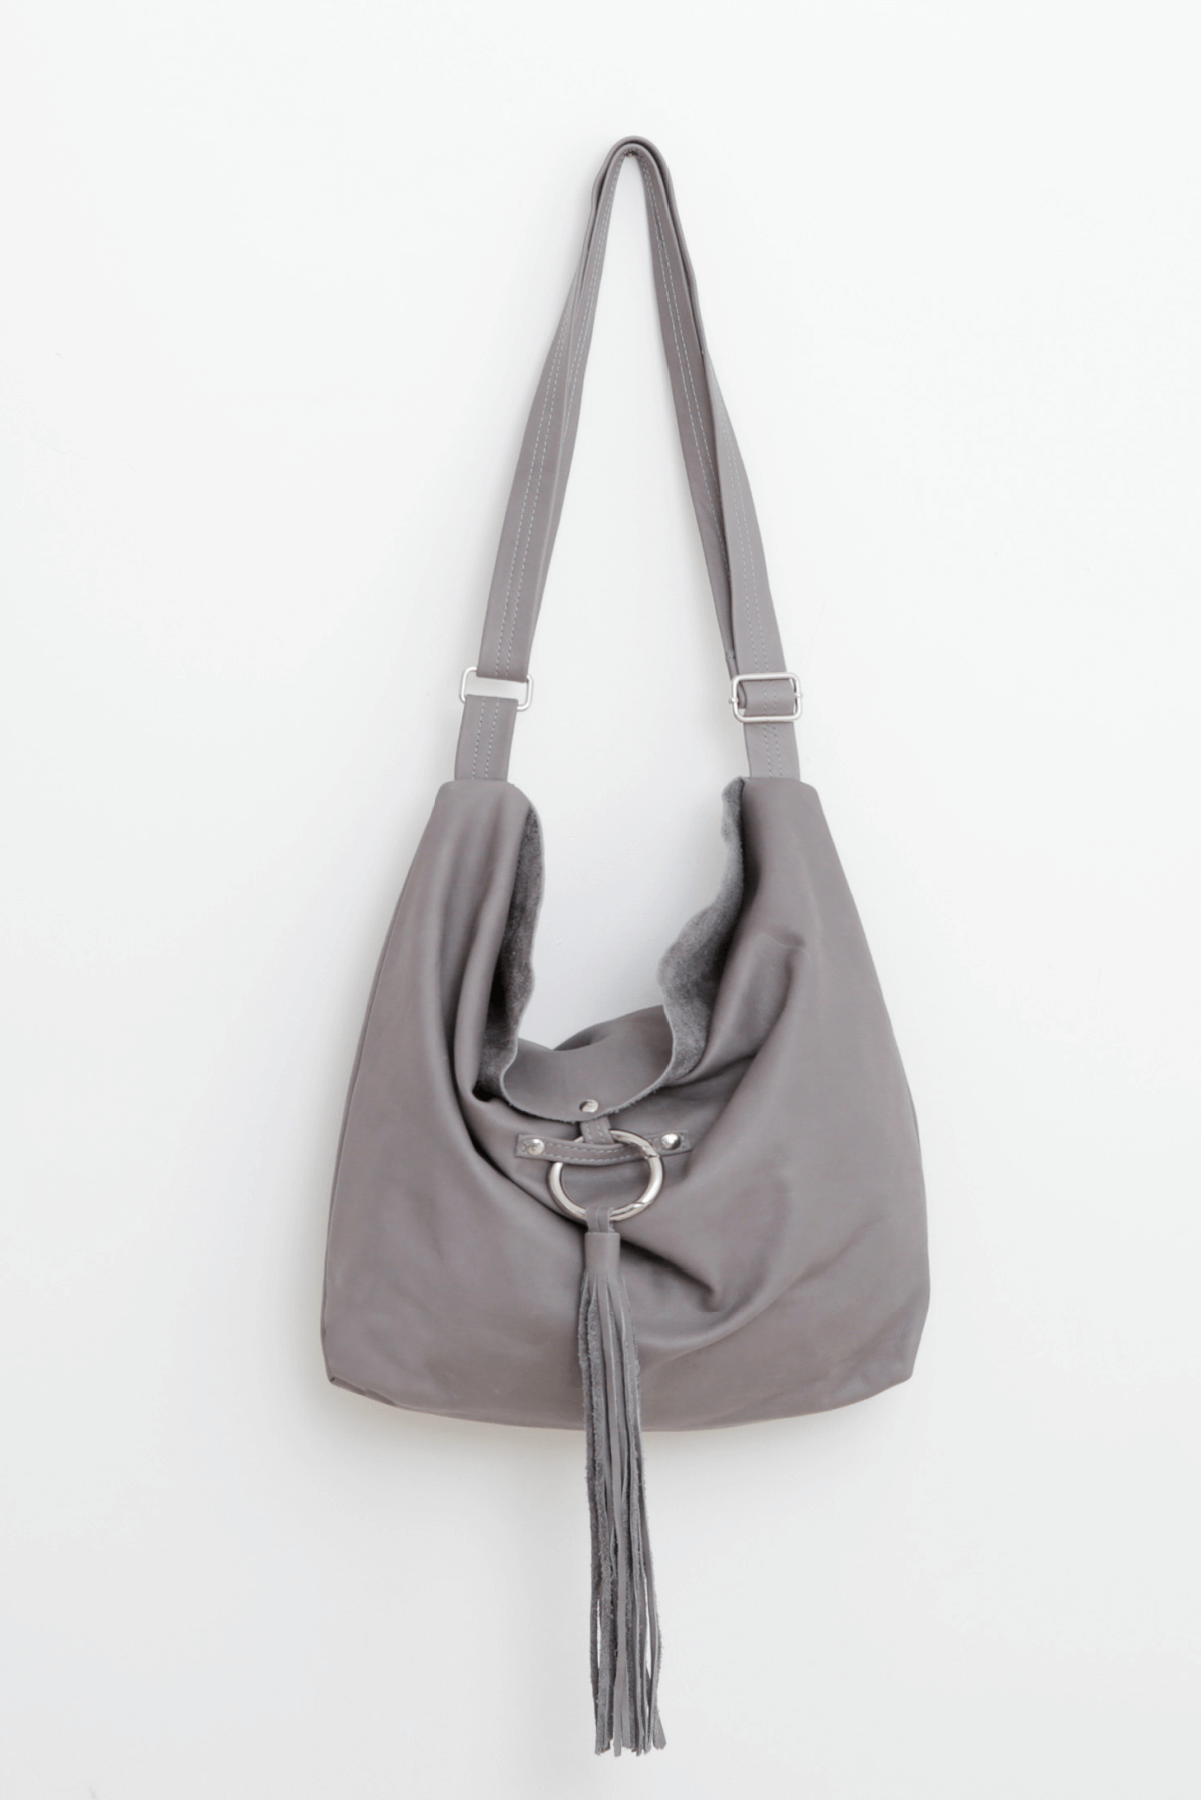 leather hobo bag, fringe bag, leather cross body bag, soft leather bag ||Gray||